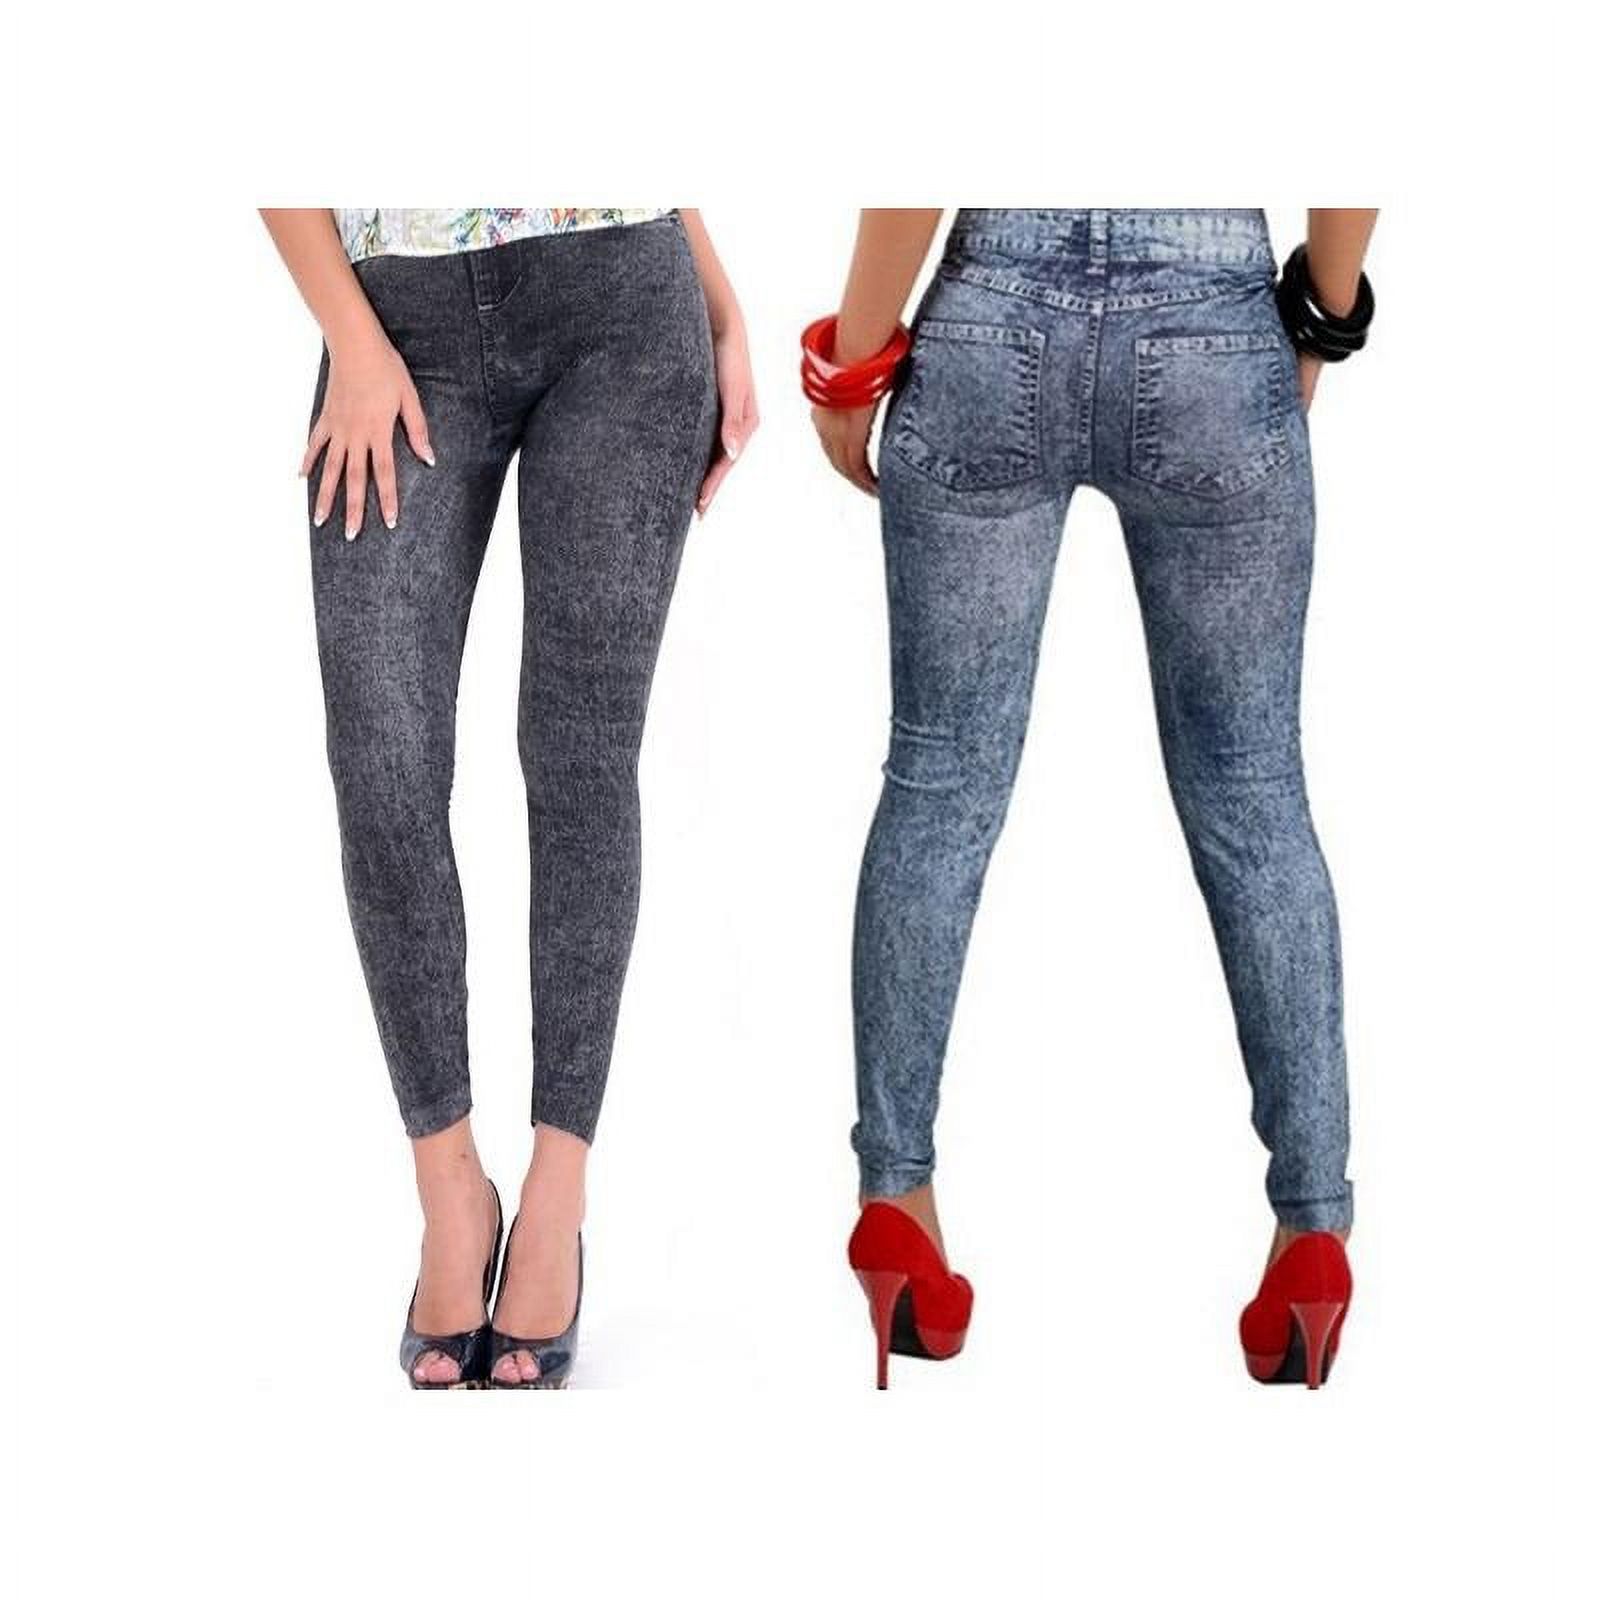 Puloru 2020 Spring Autumn New Fashion Skinny Slim Thin High Elastic Waist Washed Jeans leggings Pencil Pants Denim Leggings For Women - image 2 of 7